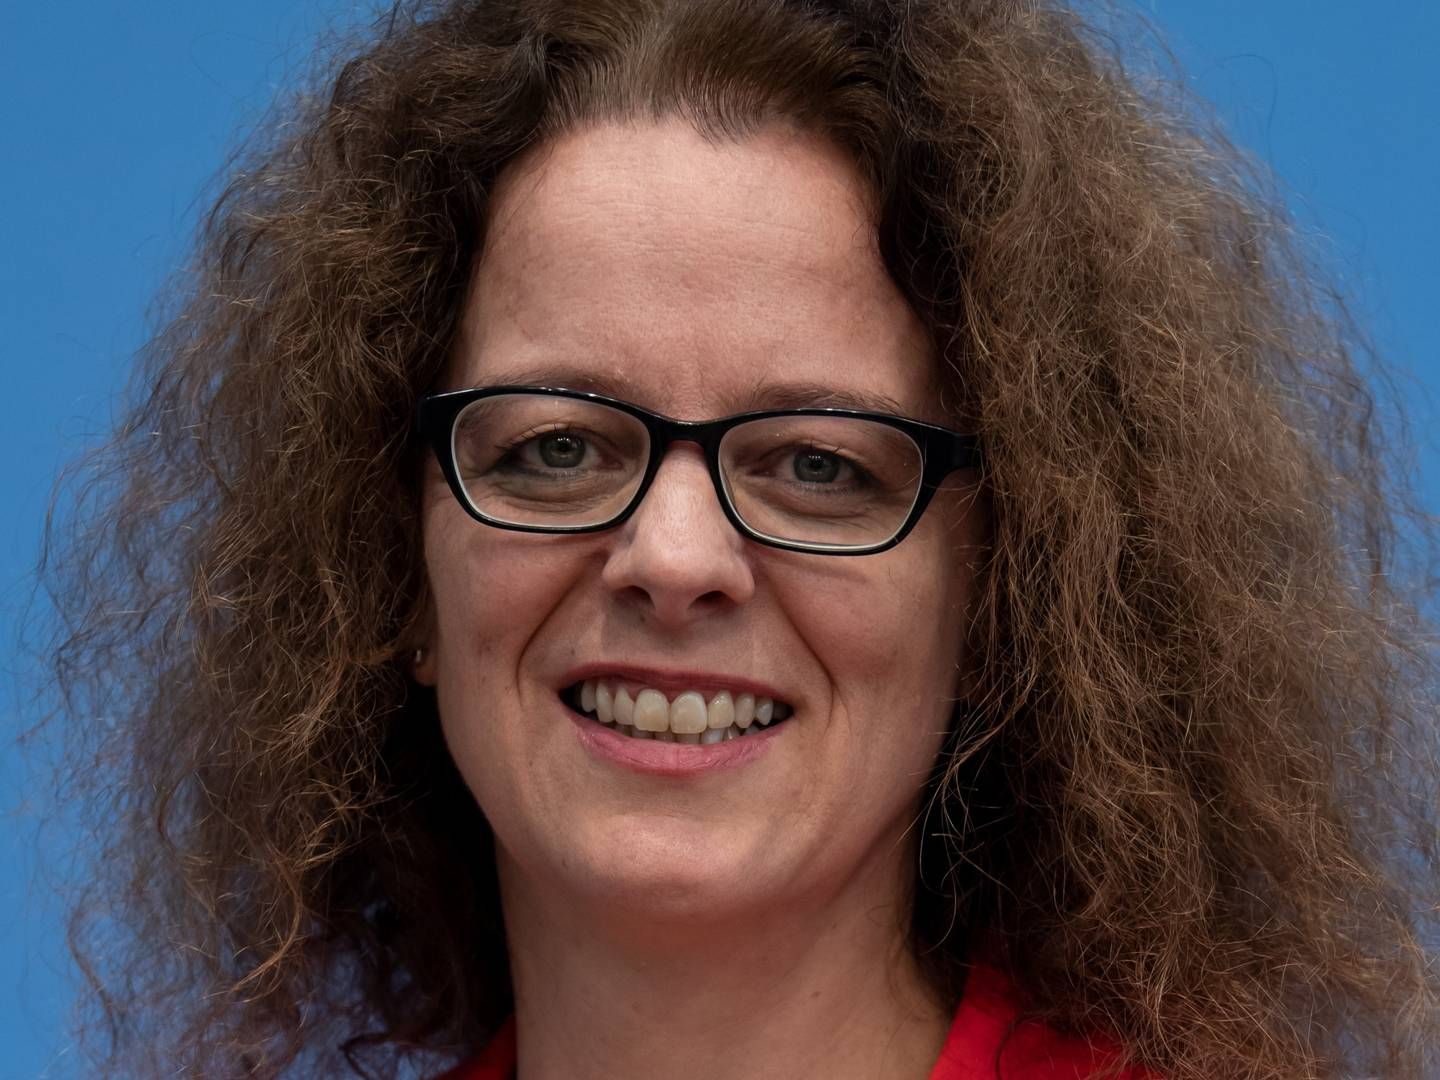 Isabel Schnabel, EZB-Direktorin | Foto: picture alliance/dpa | Bernd von Jutrczenka